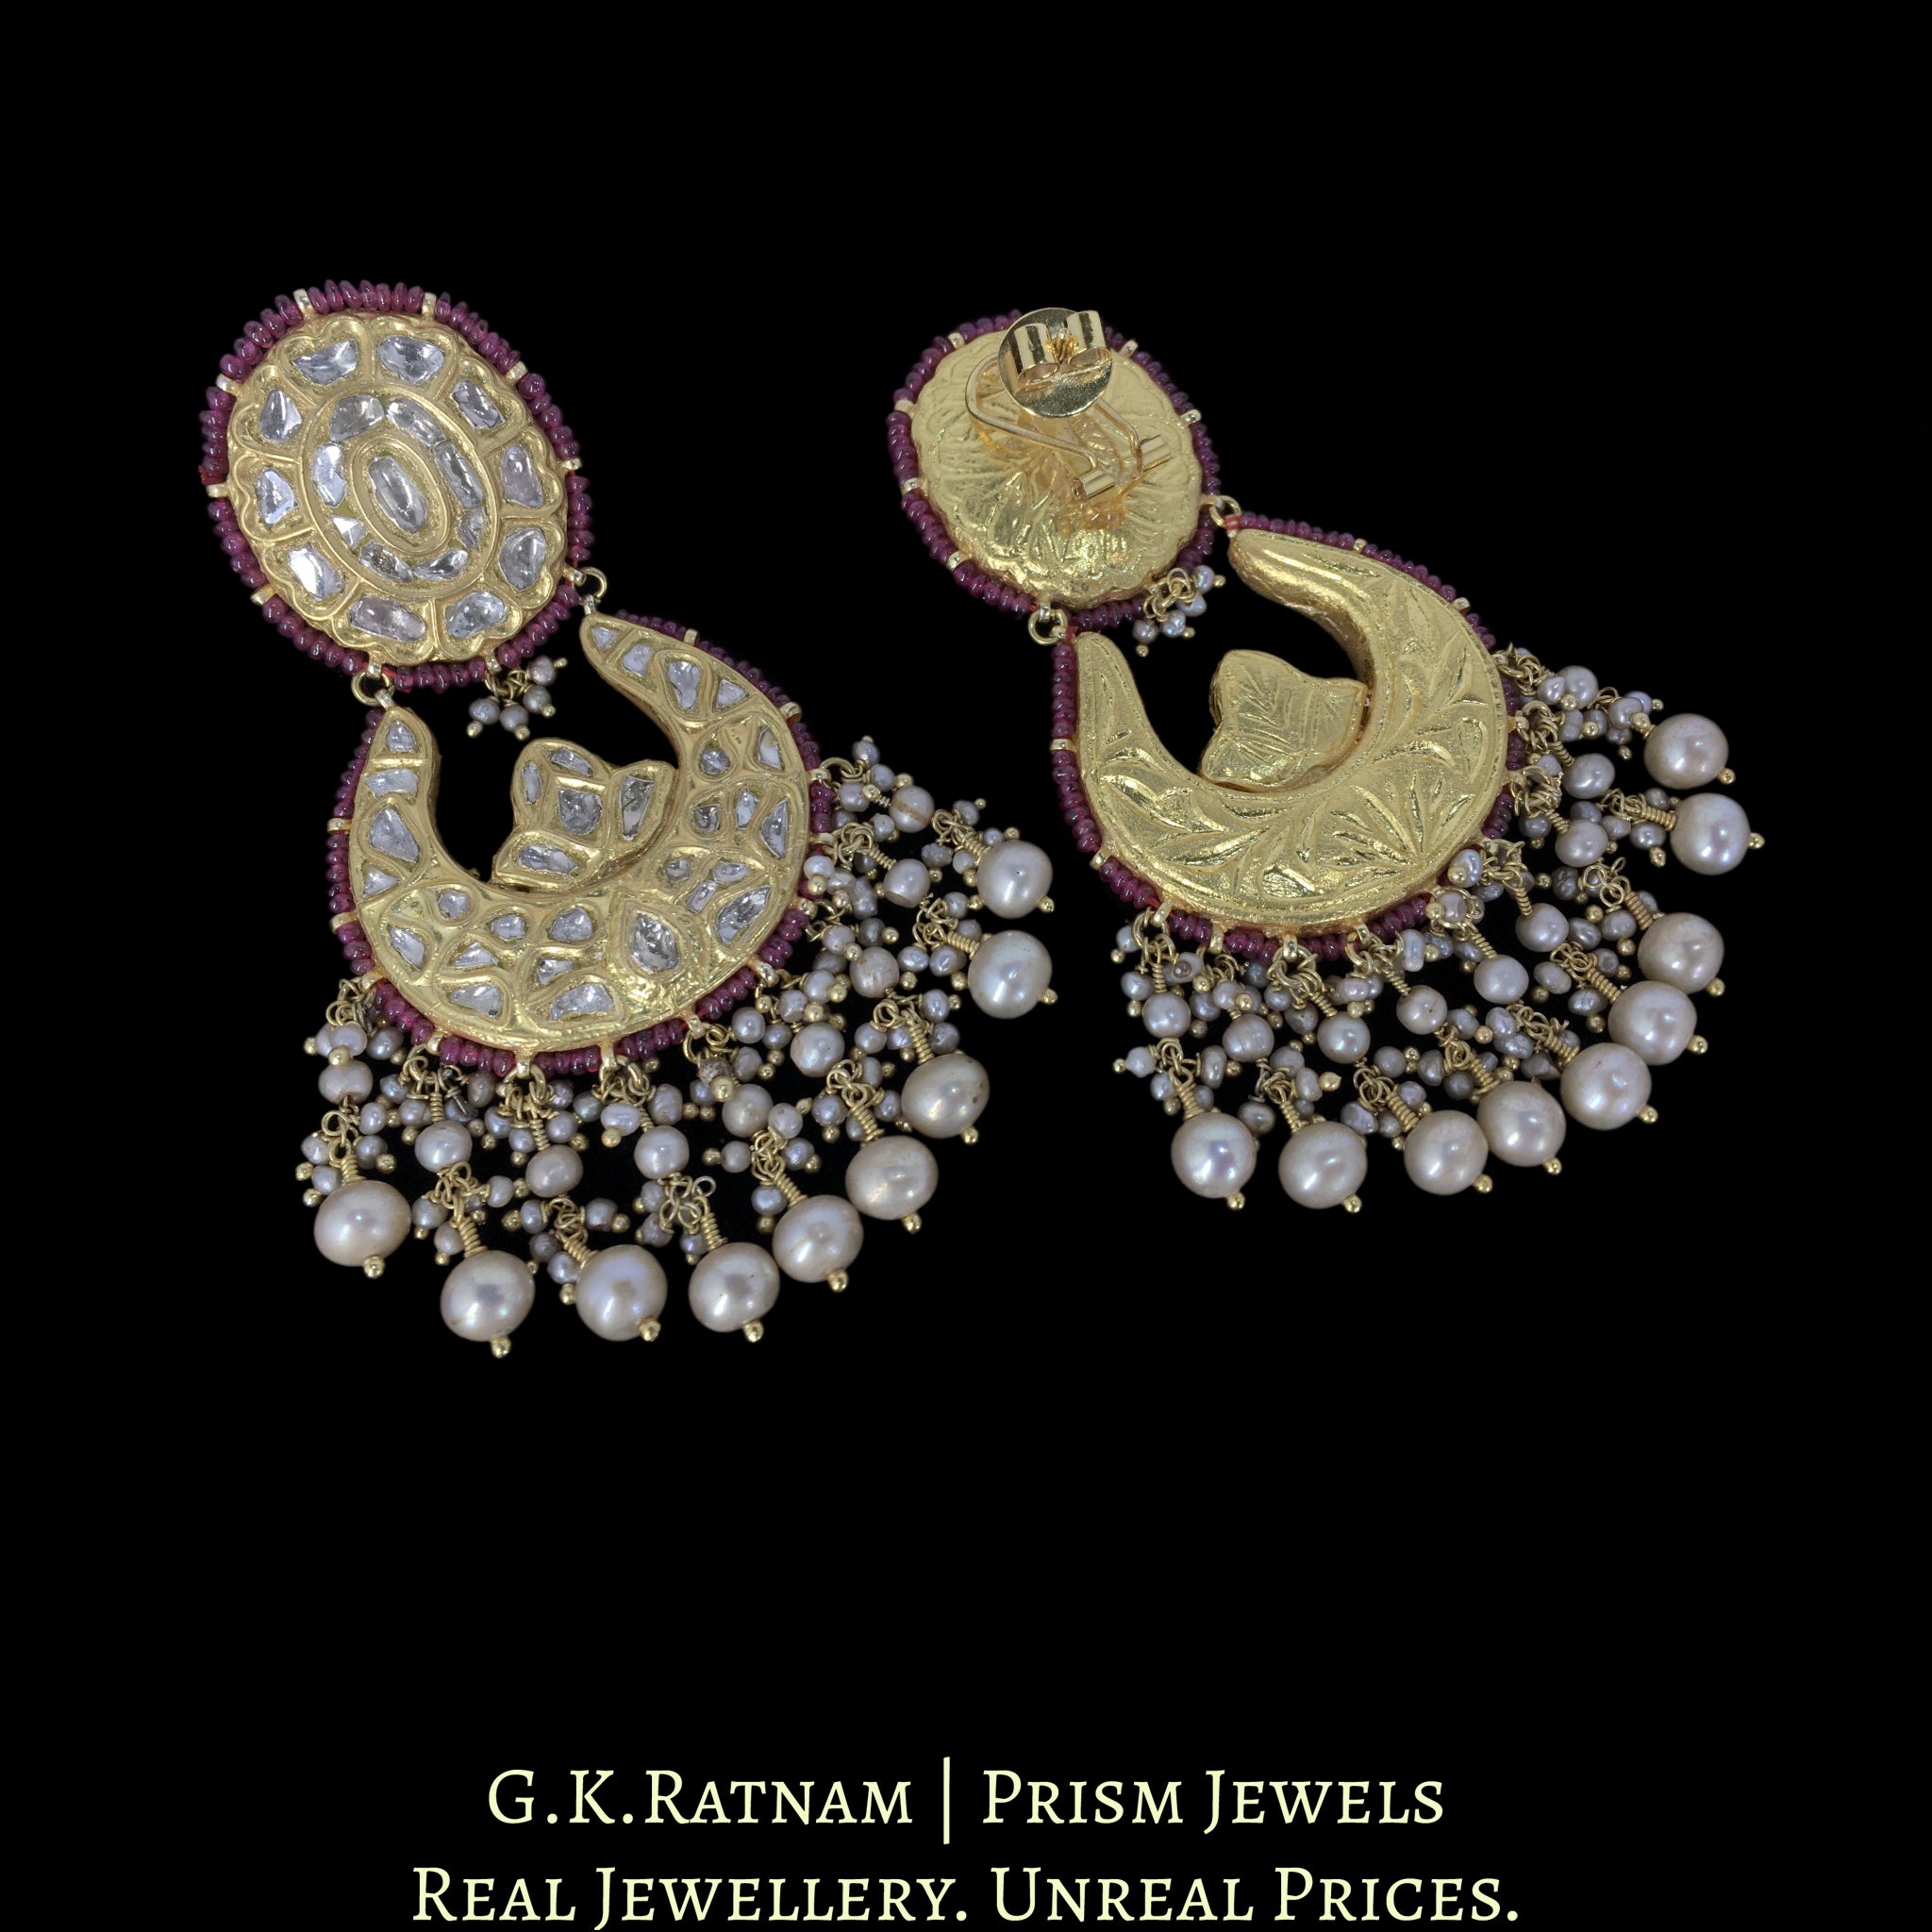 Beautiful Hyderabadi Earrings Designs | Buy Online | Stylish Earrings  Designs | New Collection 2020 - YouTube